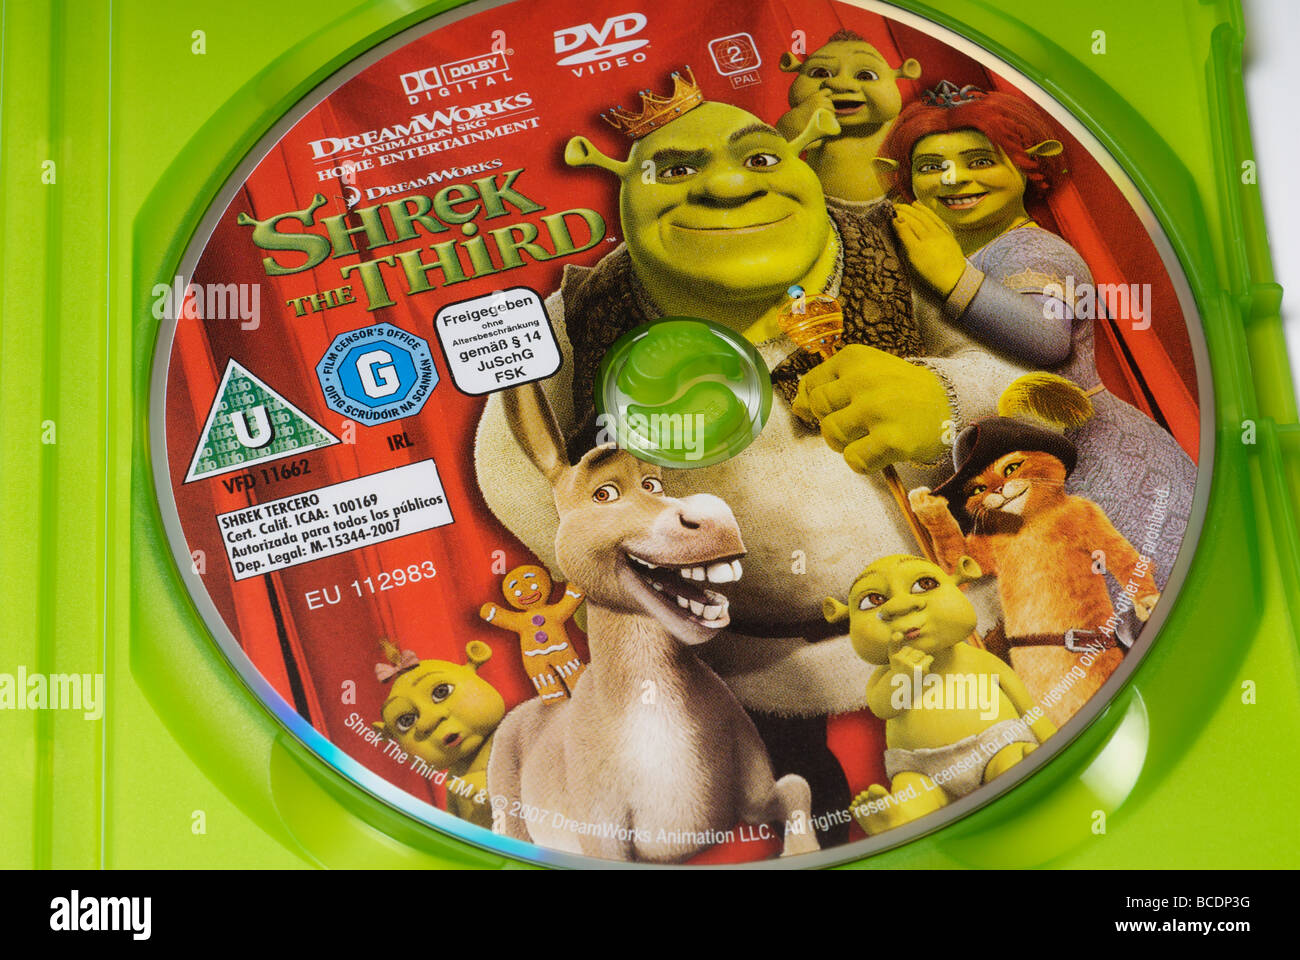 Shrek the Third DVD Stock Photo - Alamy